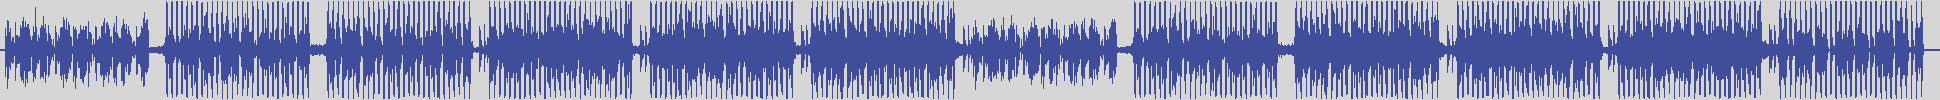 nf_boyz_records [NFY007] Mark Torrell - Purple Sky [Majestique Mix] audio wave form